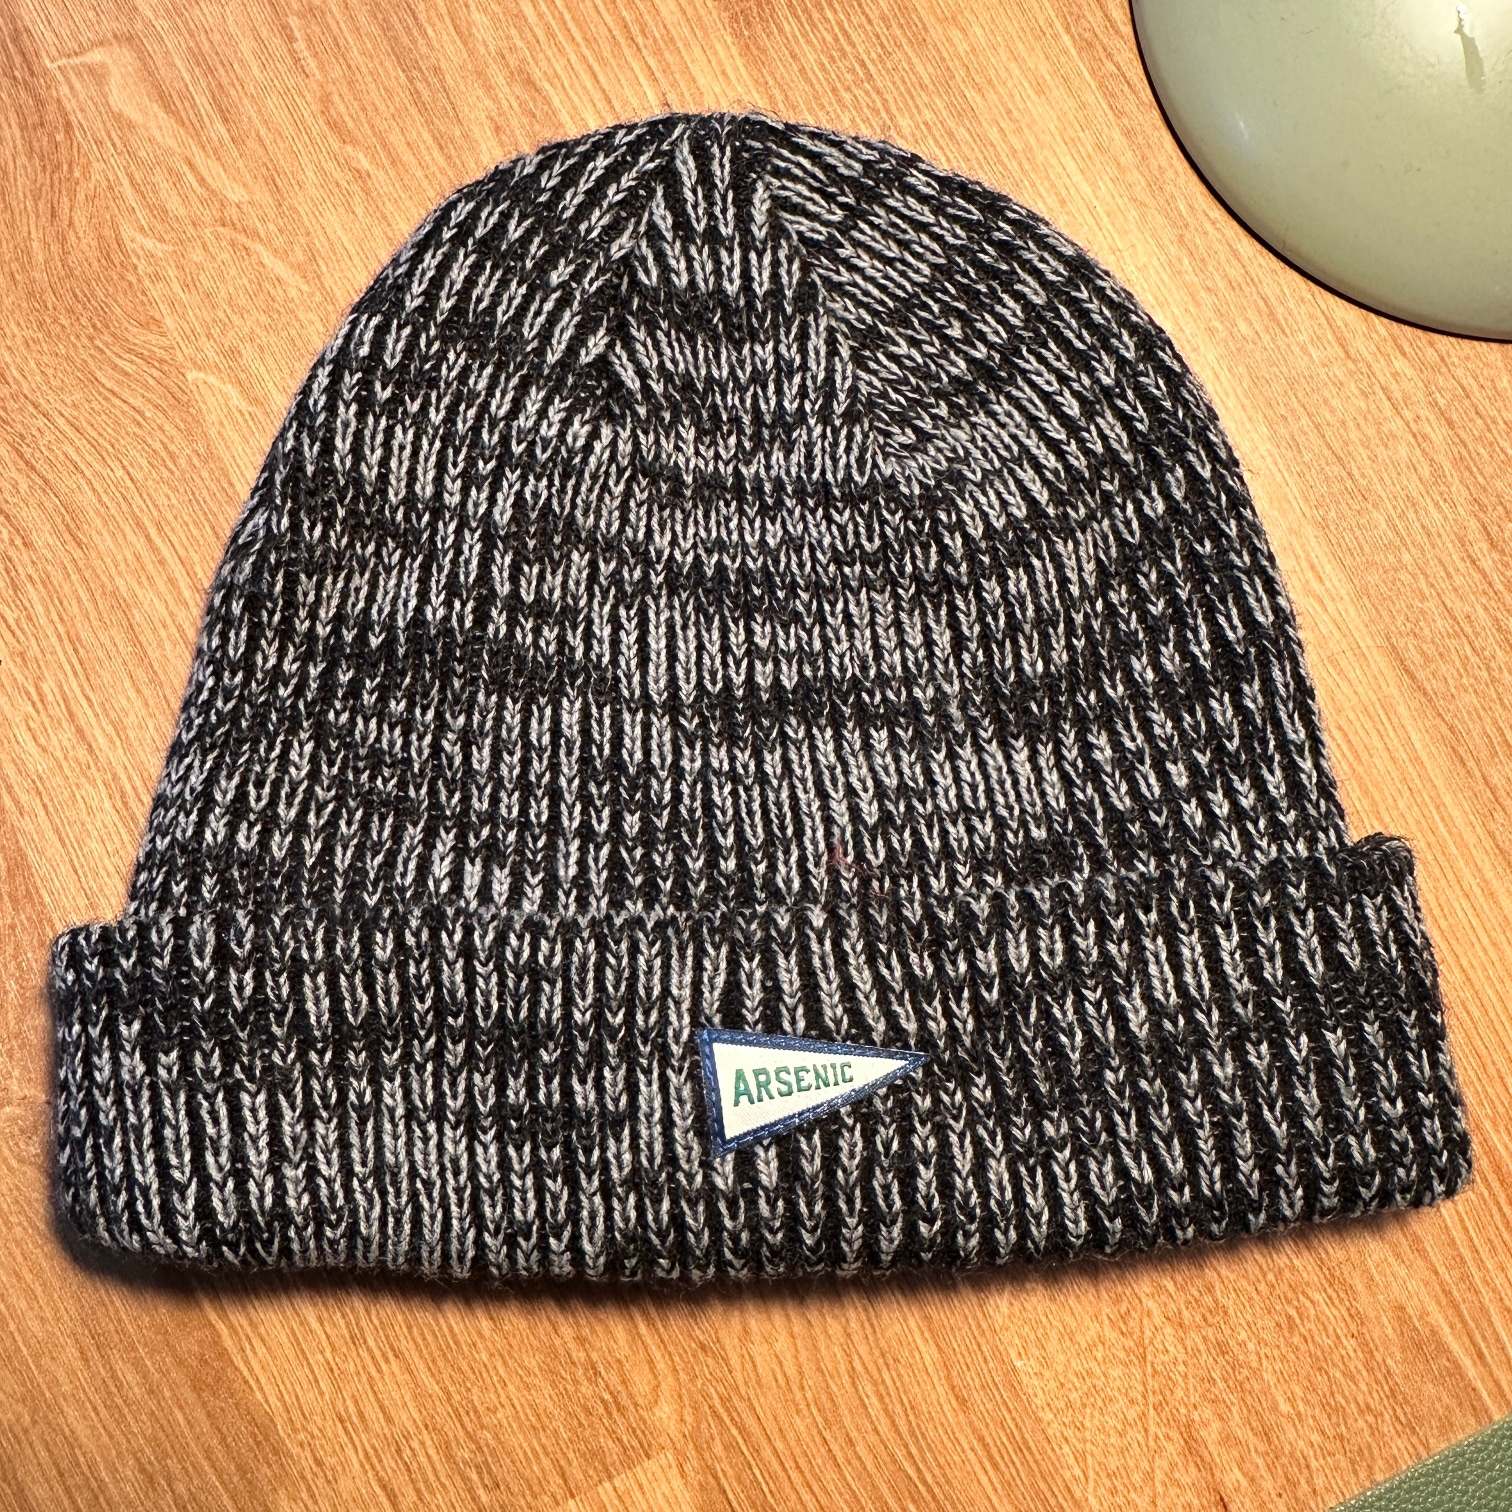 Arsenic Skiing Knit Beanie Hat Black/Gray